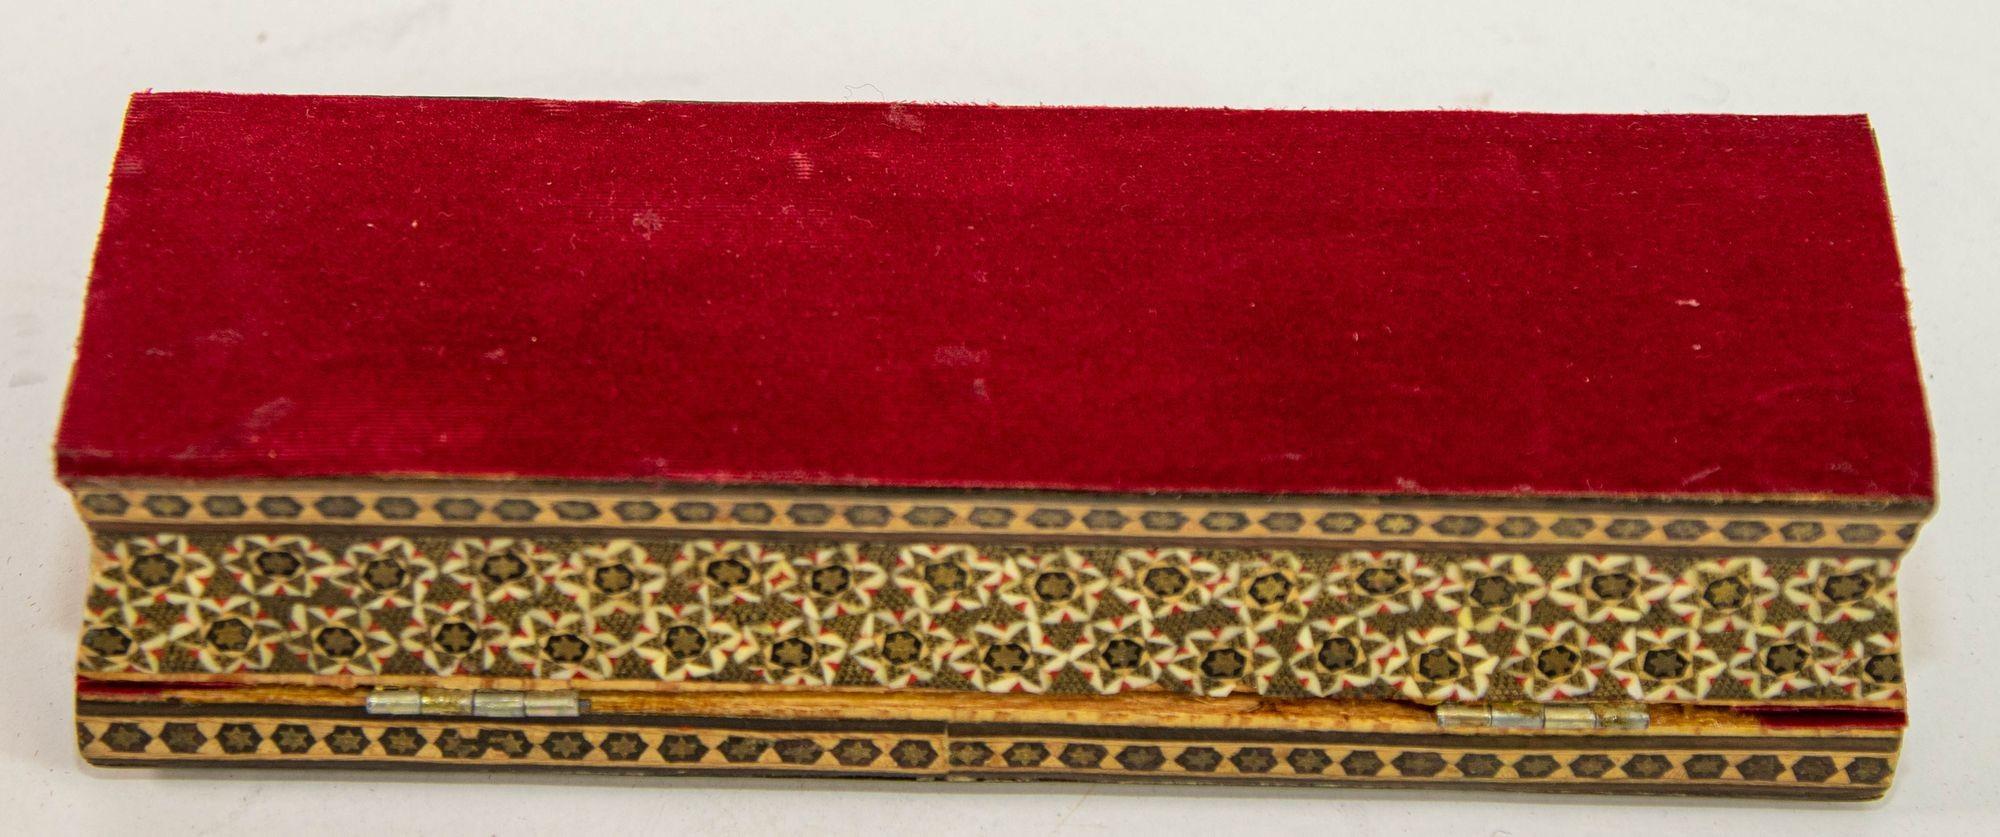 Micro Mosaic Moorish Inlaid Jewelry Pen Box For Sale 2